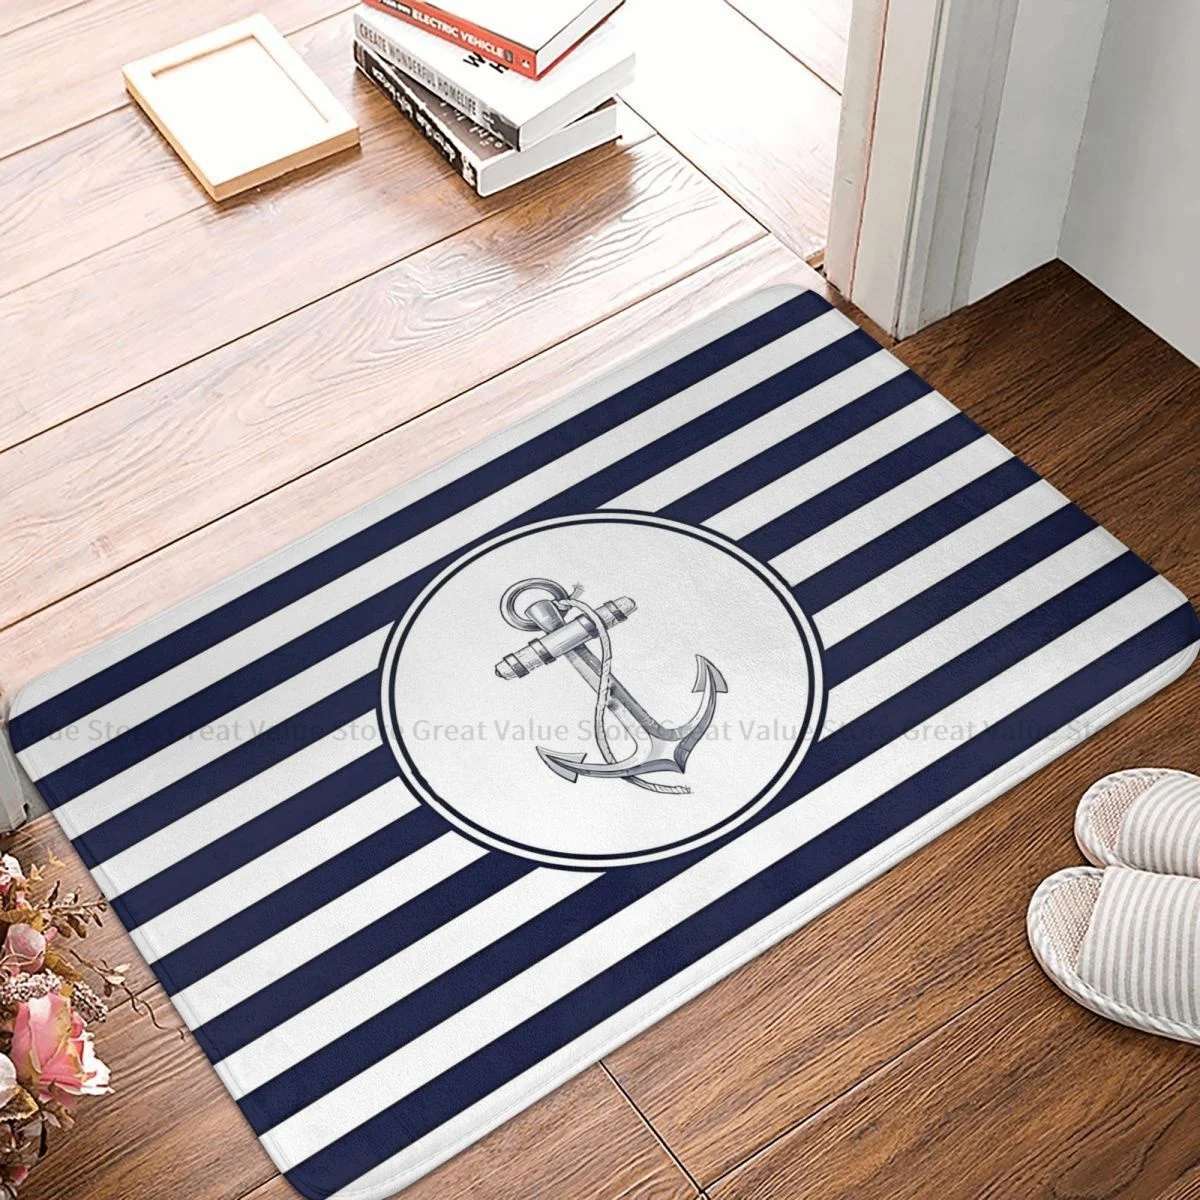 

Nautical Anchor Non-slip Doormat Navy Blue Stripes Bath Bedroom Mat Outdoor Carpet Flannel Pattern Decor